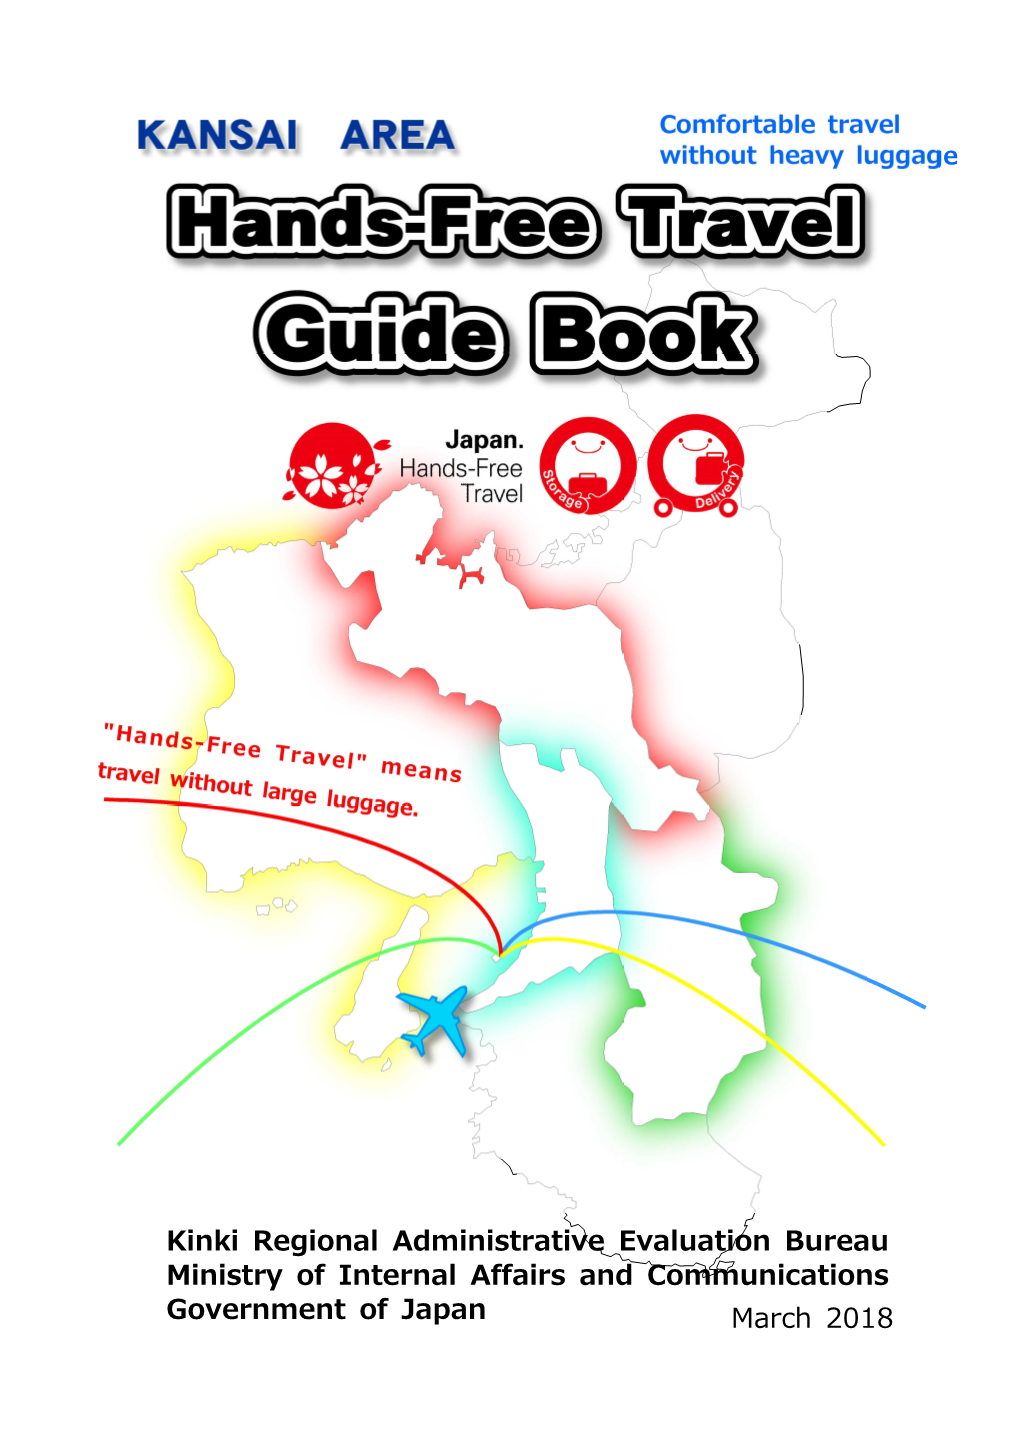 Hands-Free Travel Guide Book 〔Kansai Area〕